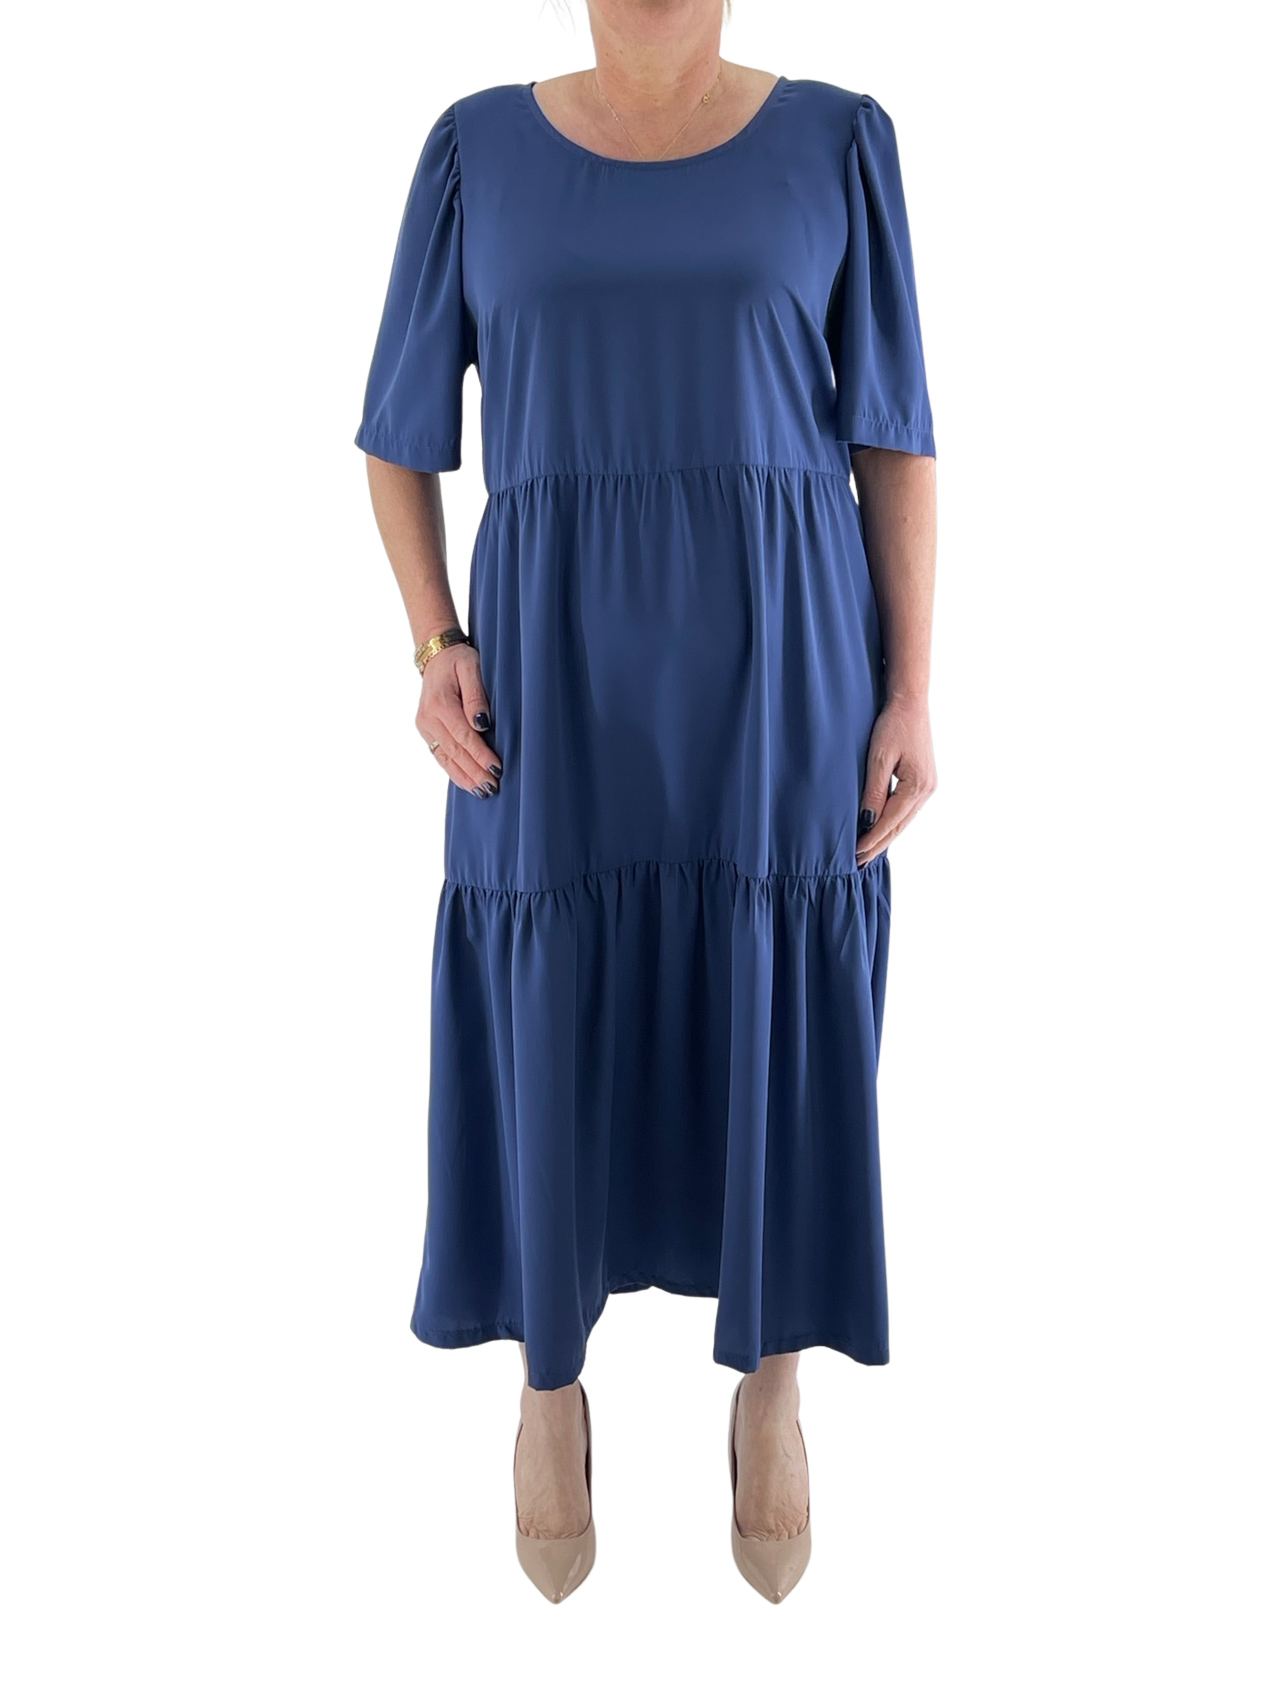 Monochrome dress with ruffles 41022